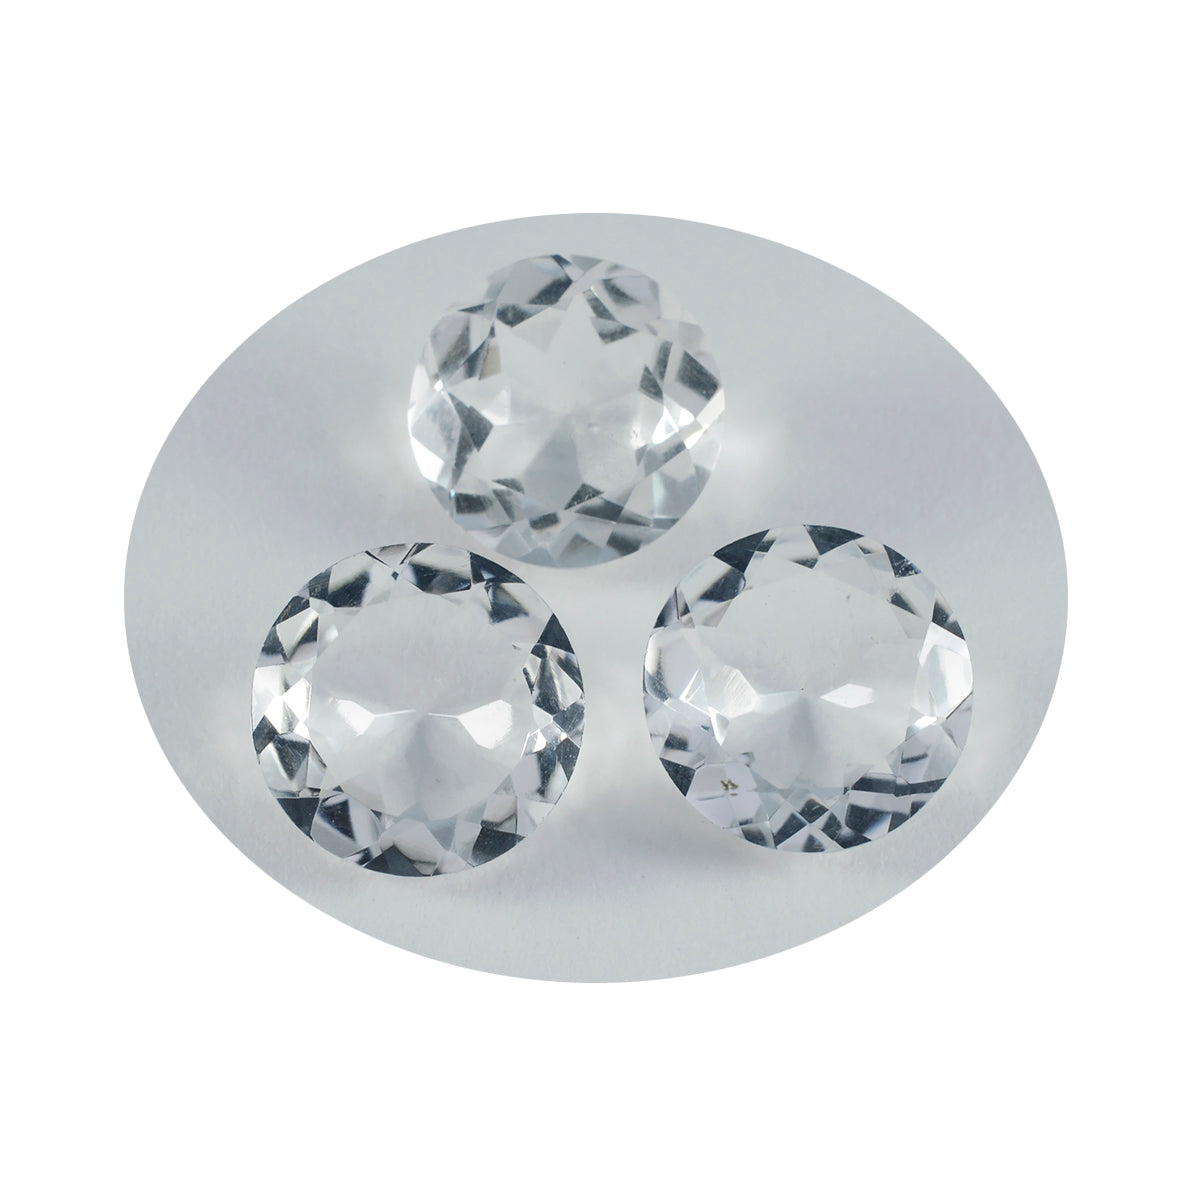 Riyogems 1PC White Crystal Quartz Faceted 14x14 mm Round Shape Nice Quality Stone